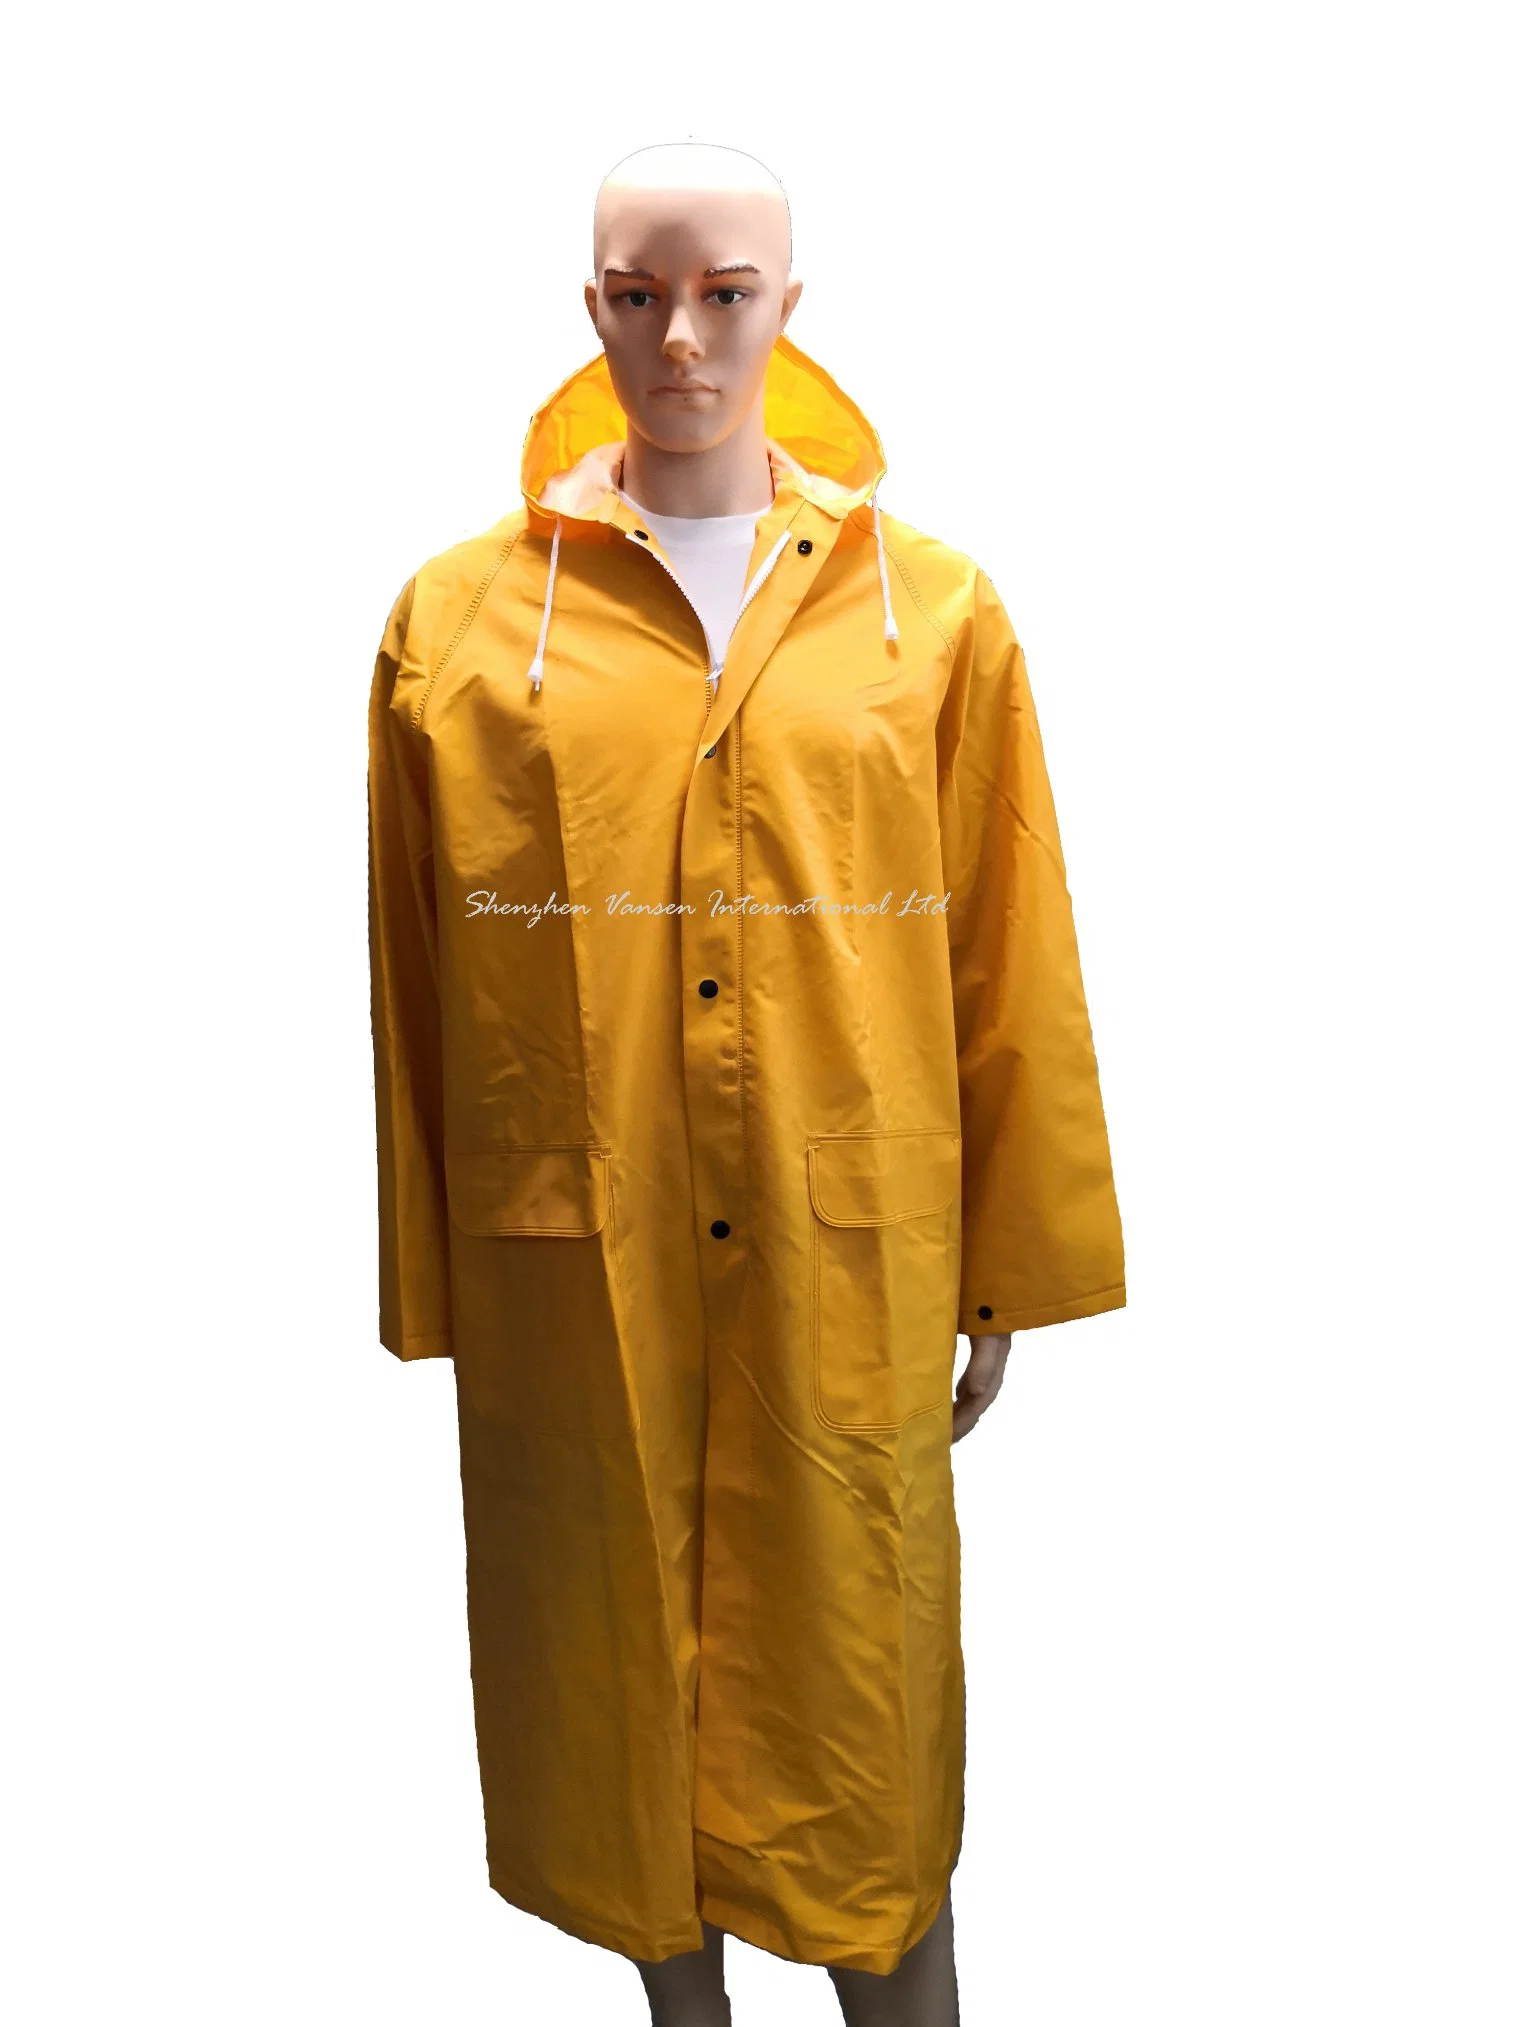 Hooded PVC/Polyester/PVC Raincoat, Rainwear, Work Clothes, Working Rain Coat, Waterproof Rain Jacket, Safety Rain Coat, Cheap Rain Wear